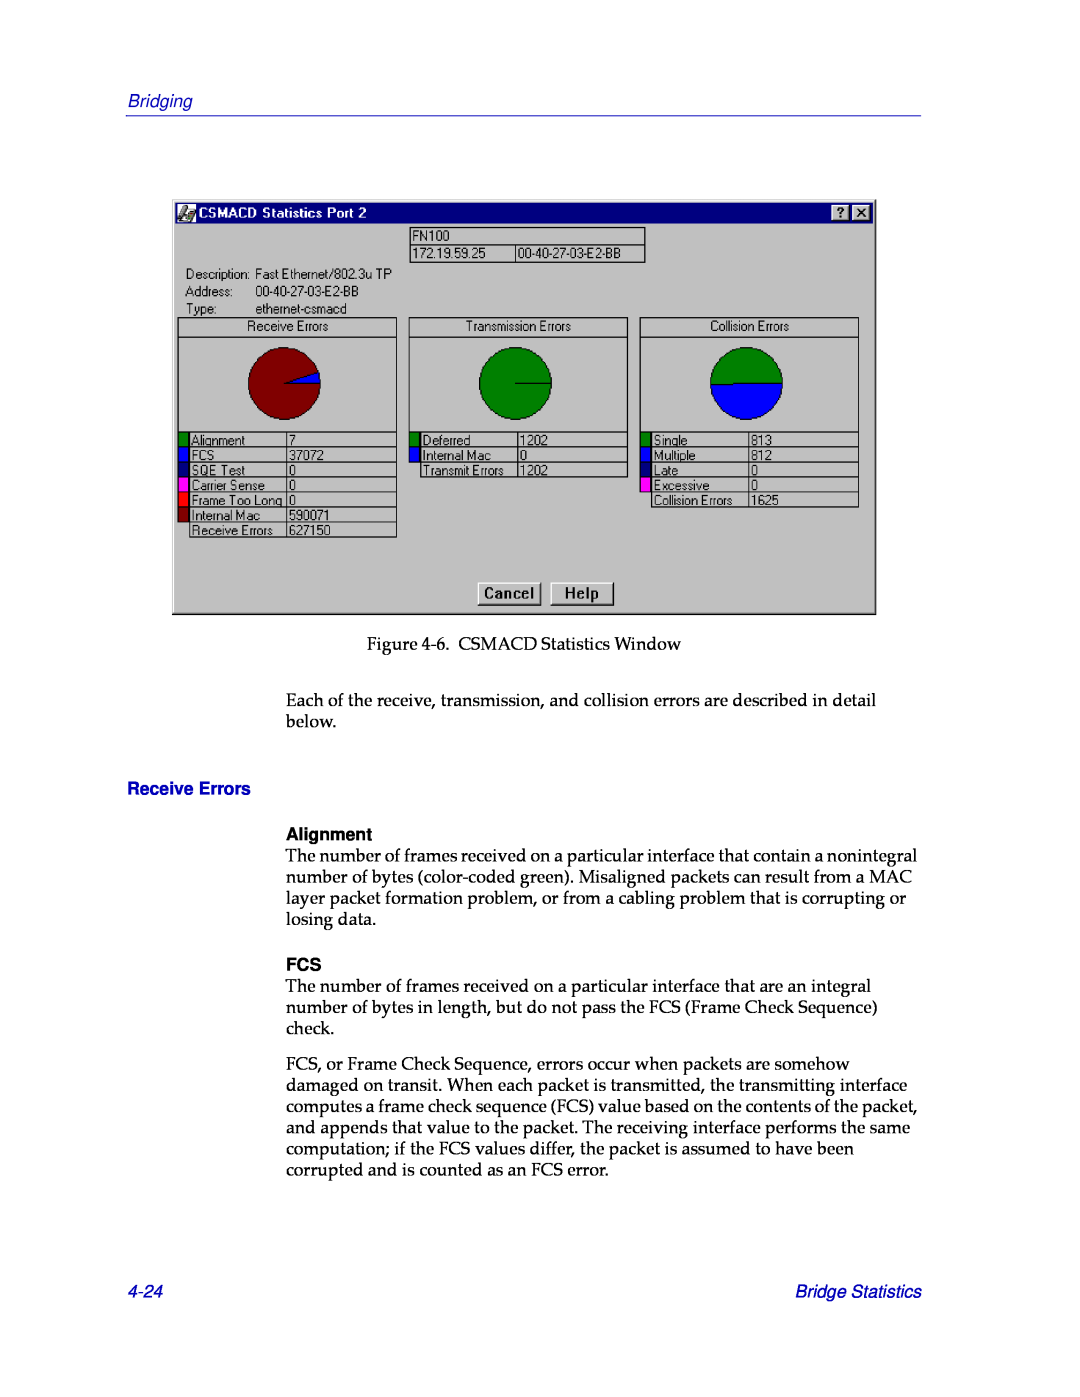 Cabletron Systems CSX400, CSX200 manual Receive Errors, Alignment, 4-24, Bridging, Bridge Statistics 